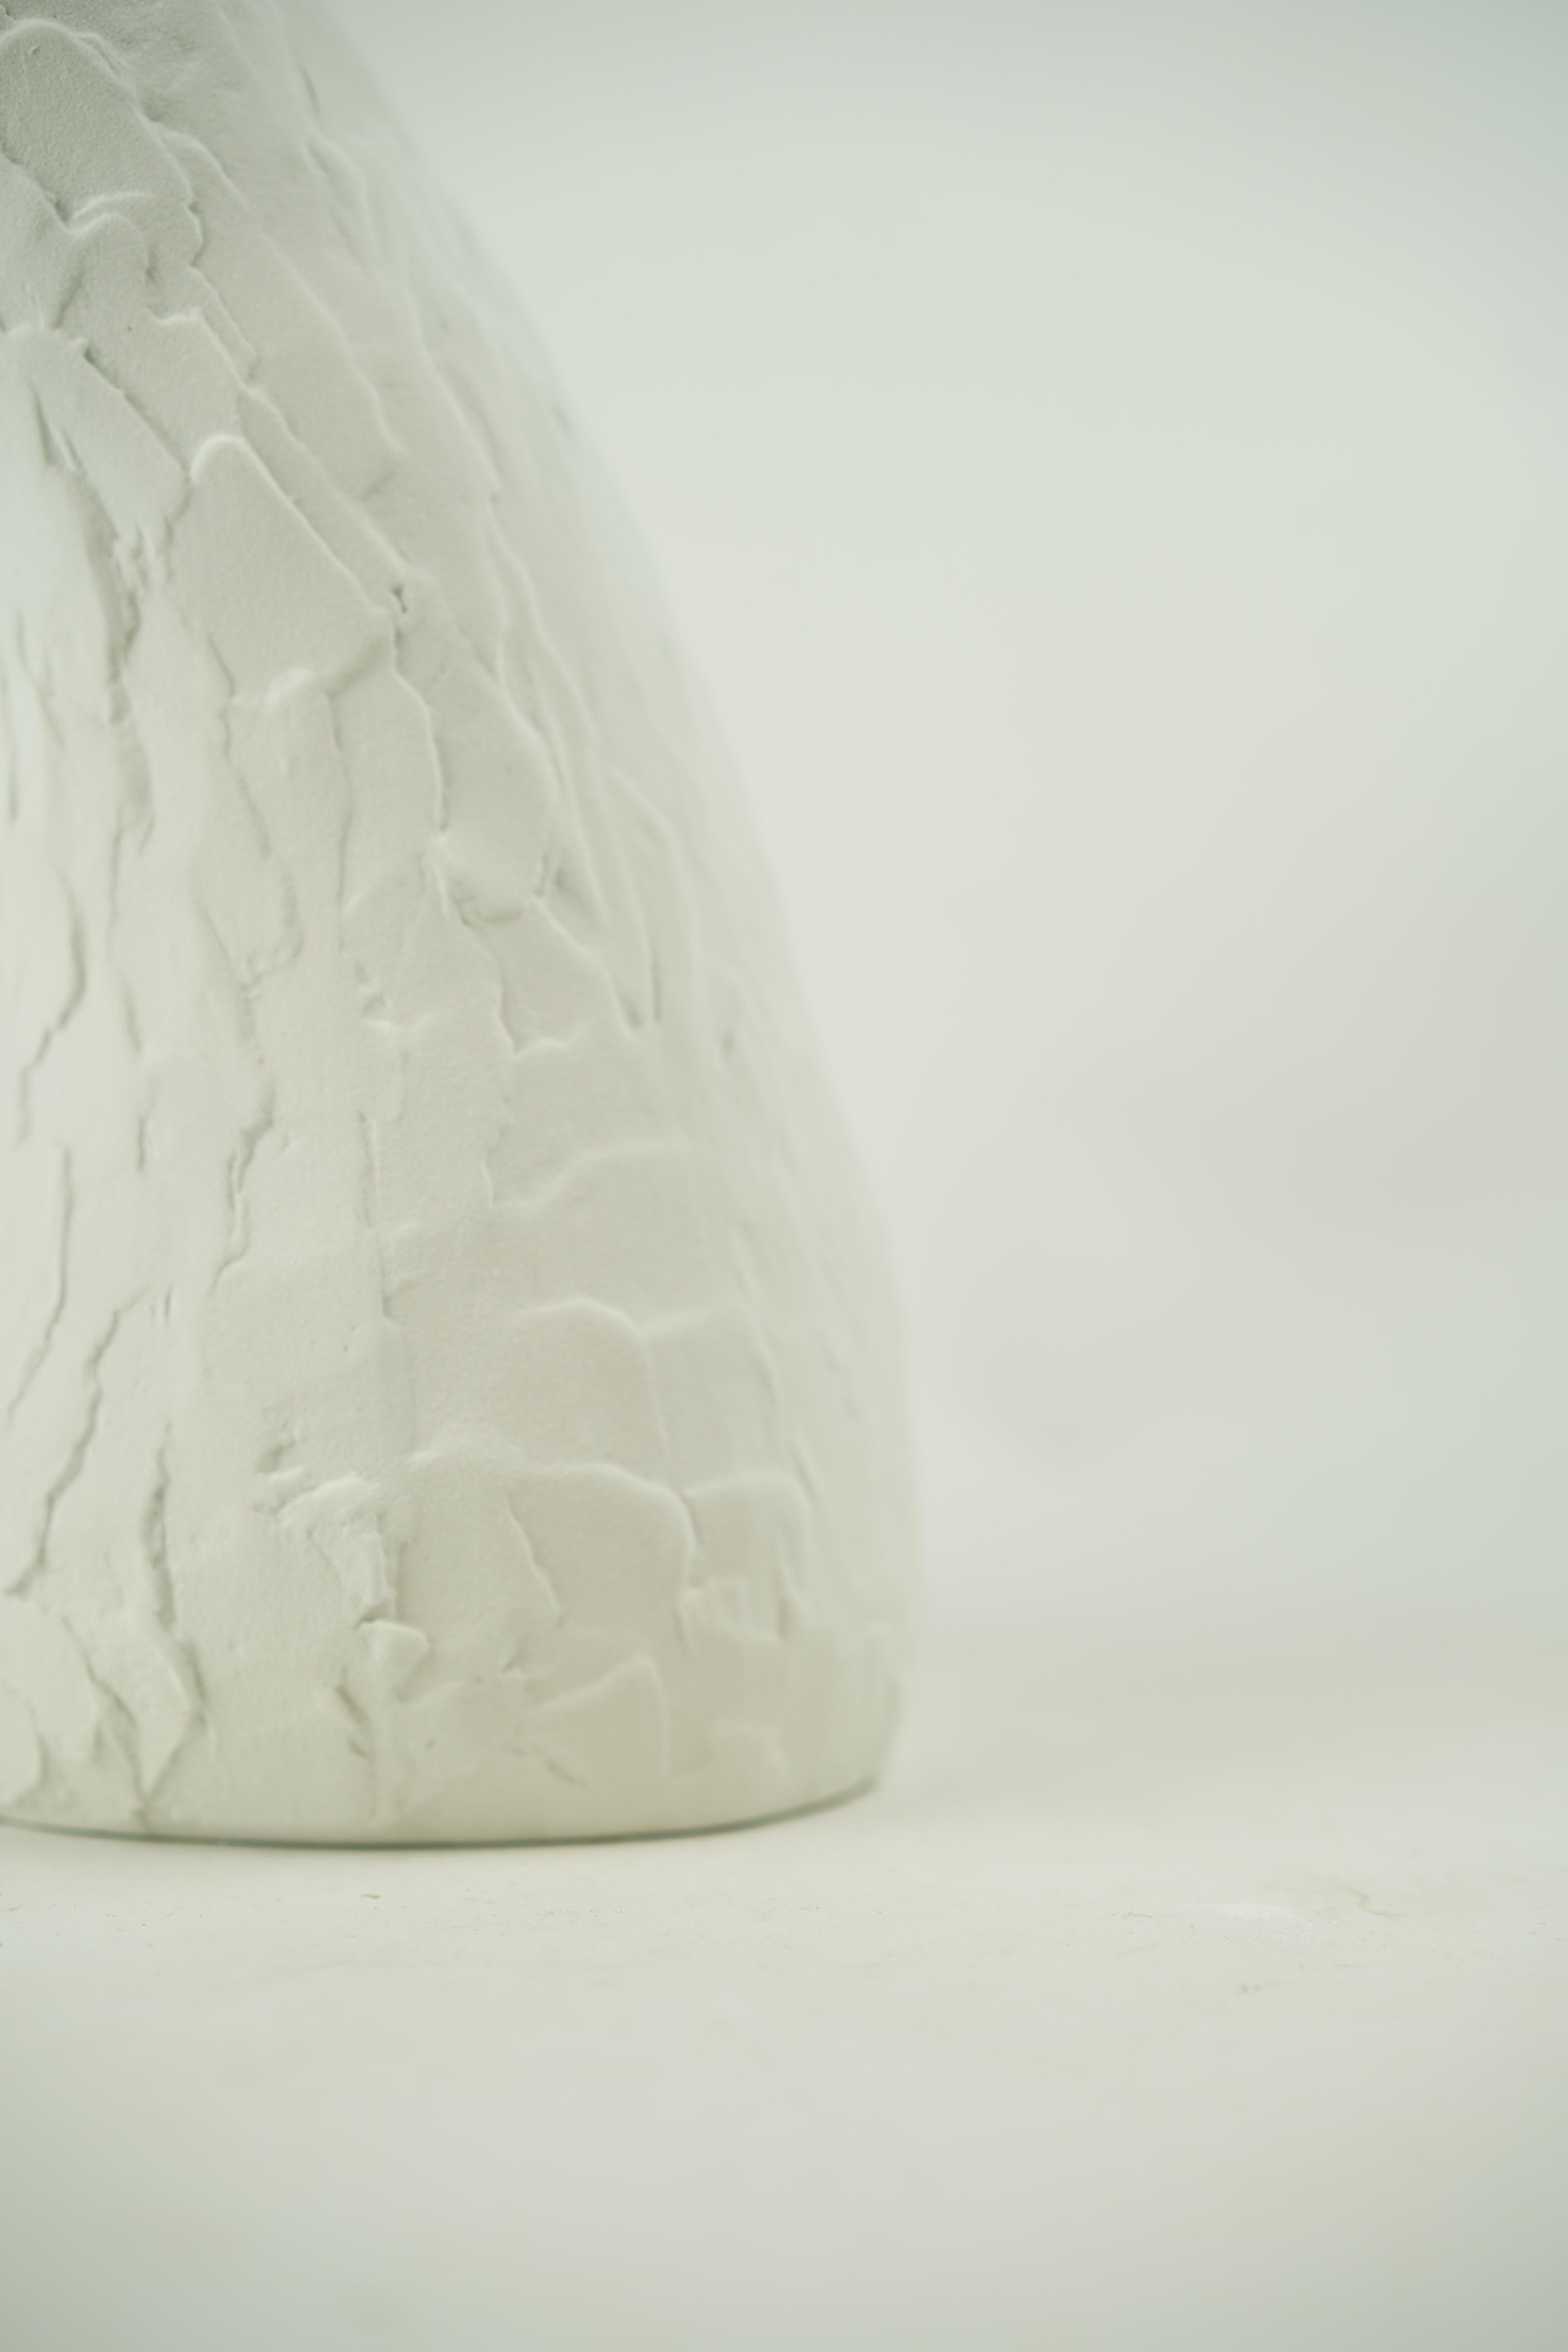 Hand-Crafted Wabi Sabi Bow Ceramic Vase For Sale